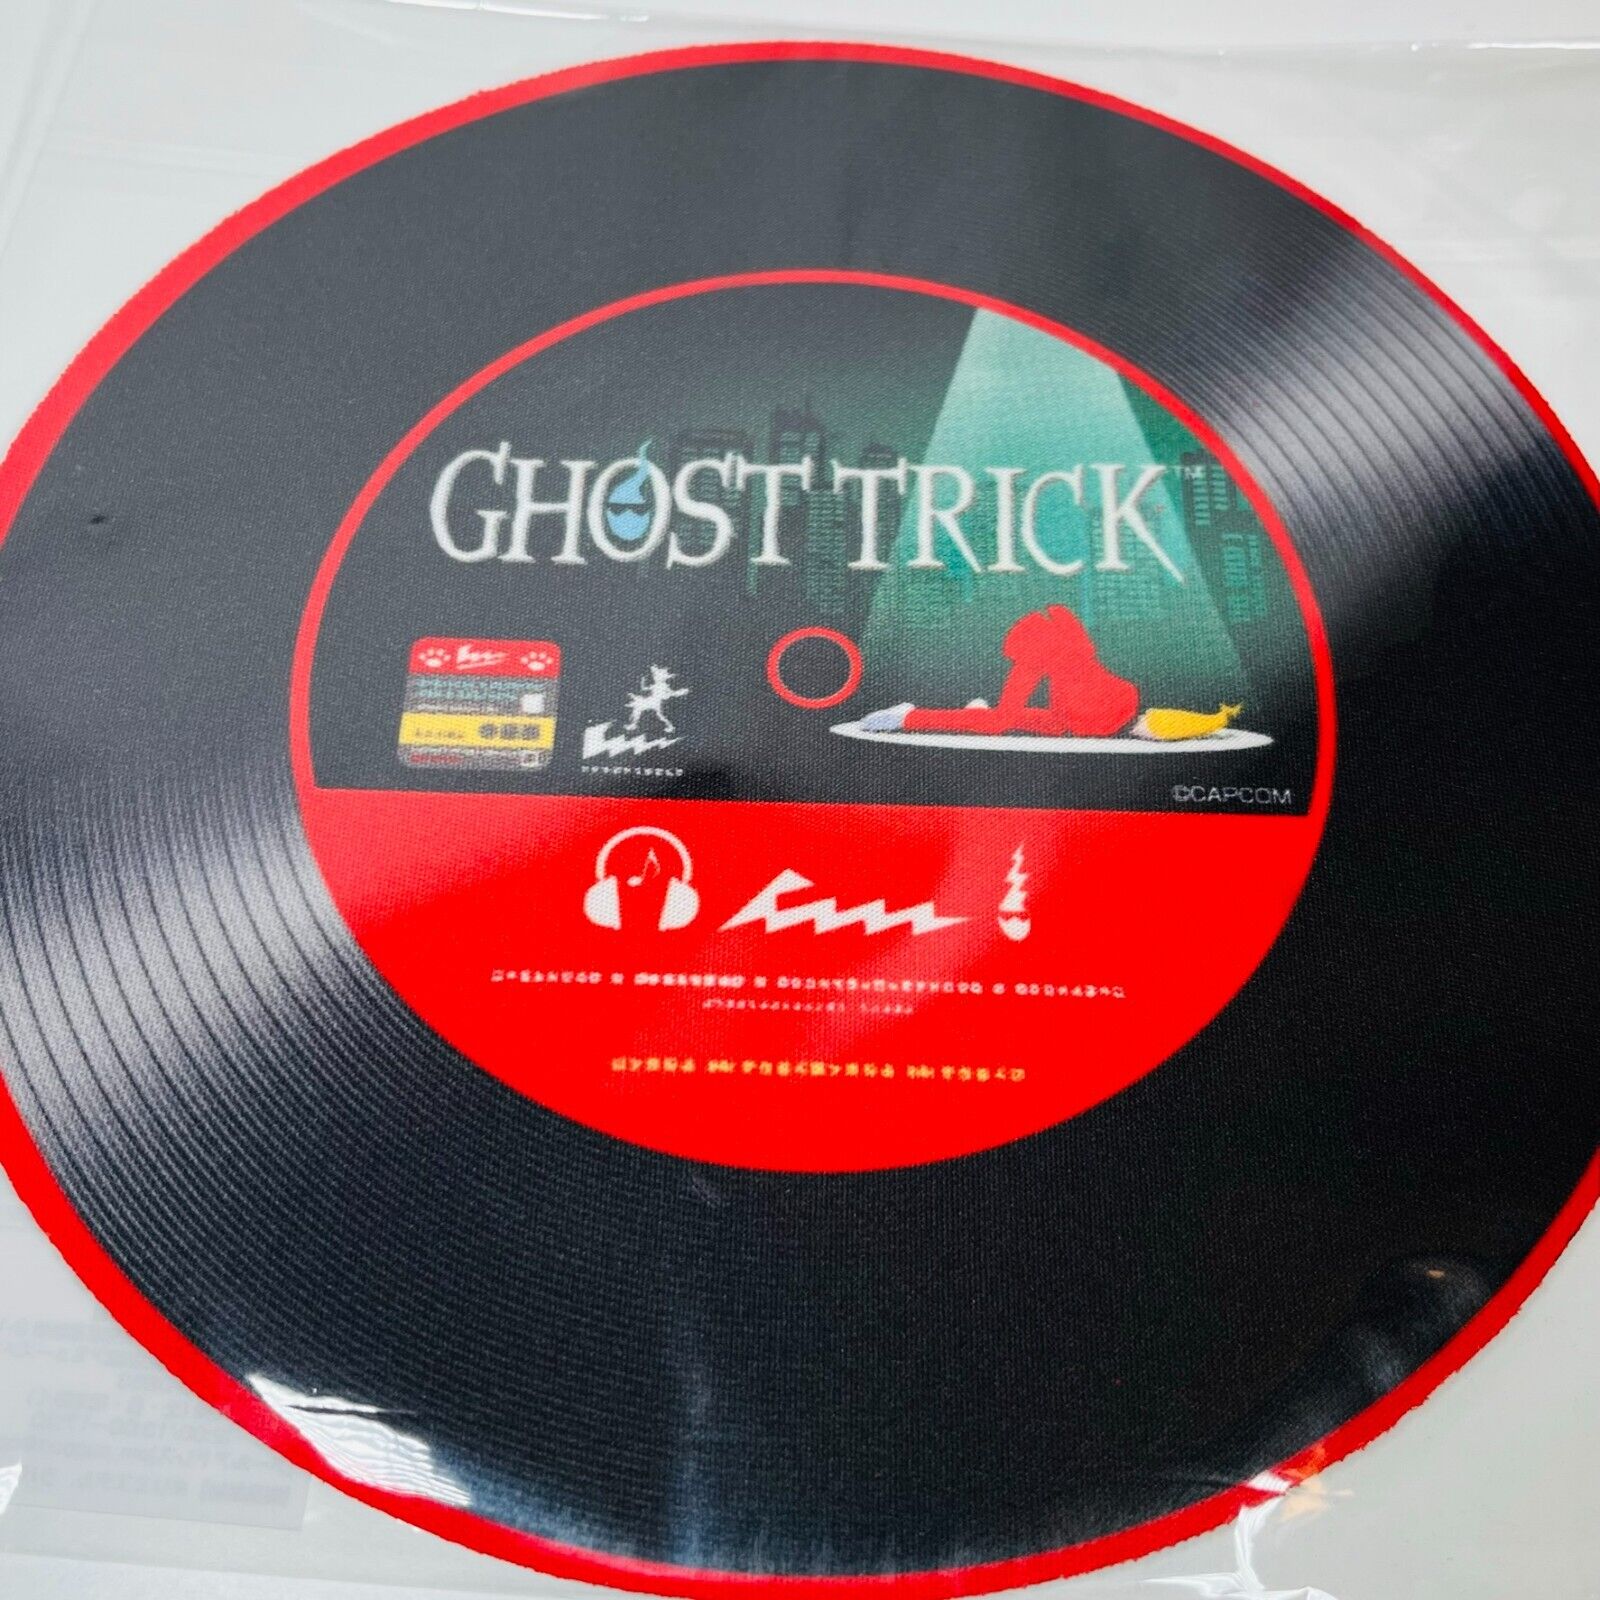 Ghost Trick mousepad - Vinyl Record version CAPCOM Japan exclusive promo item